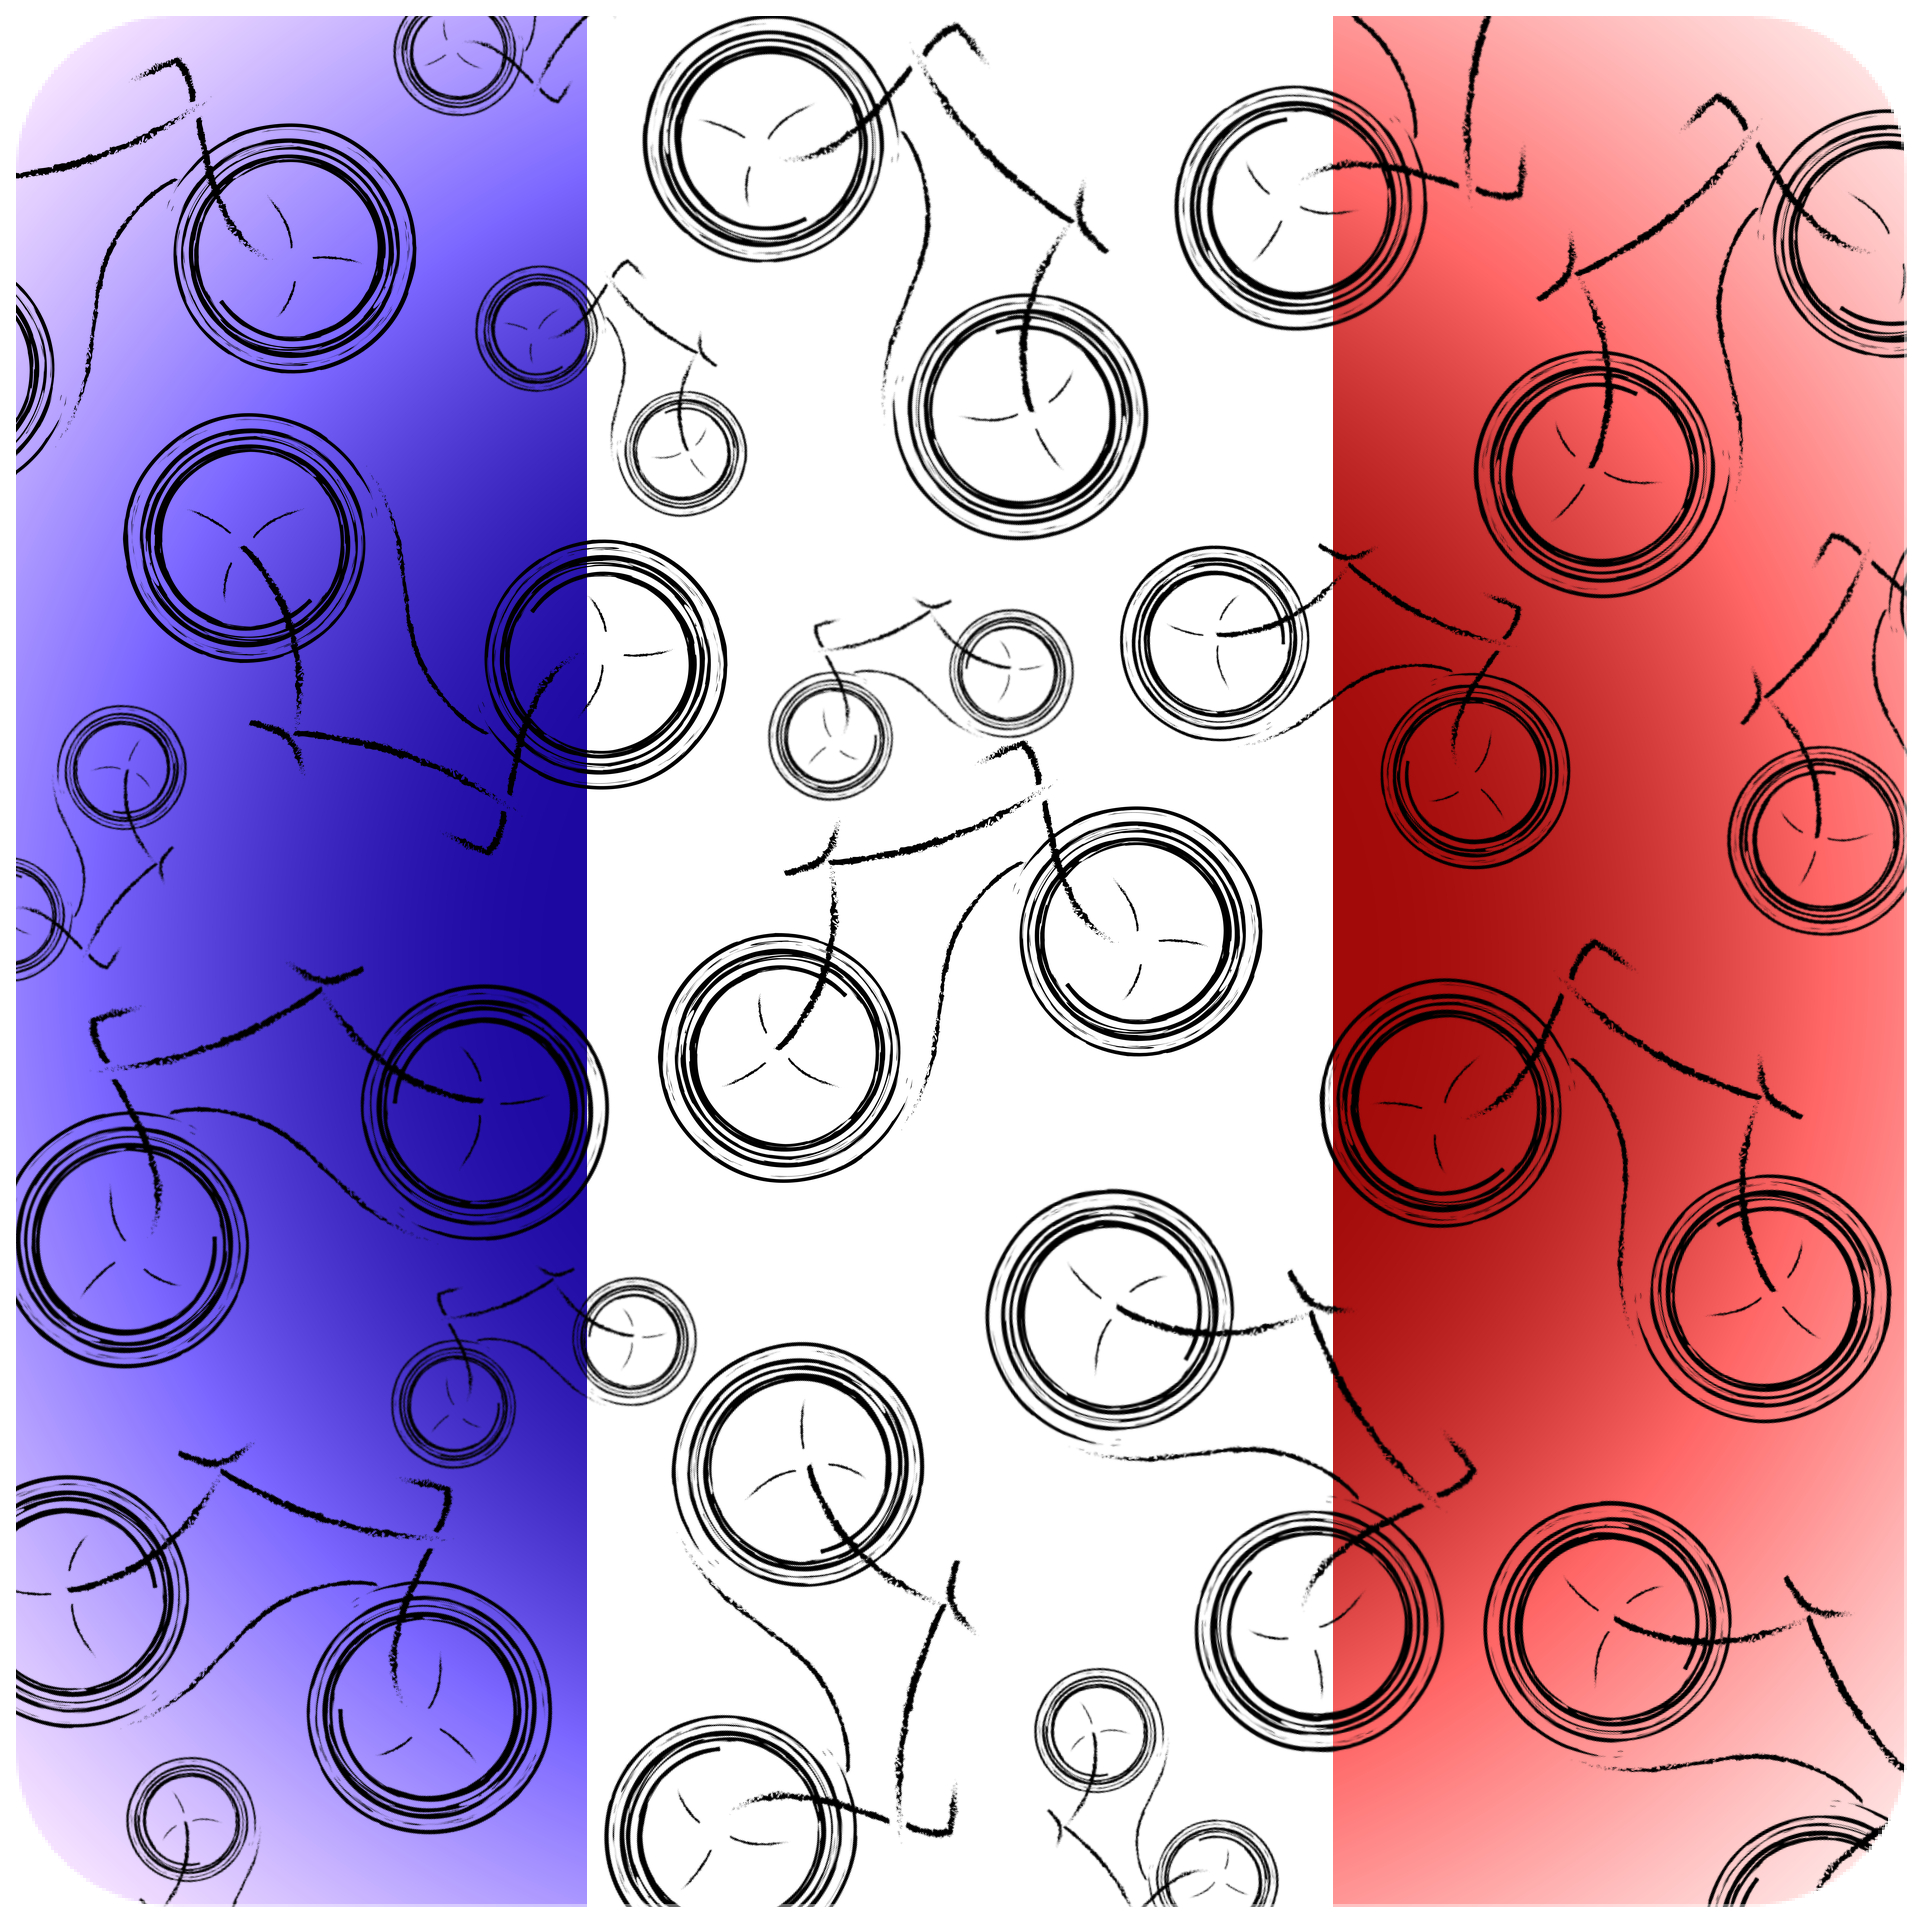 bikes on french flag